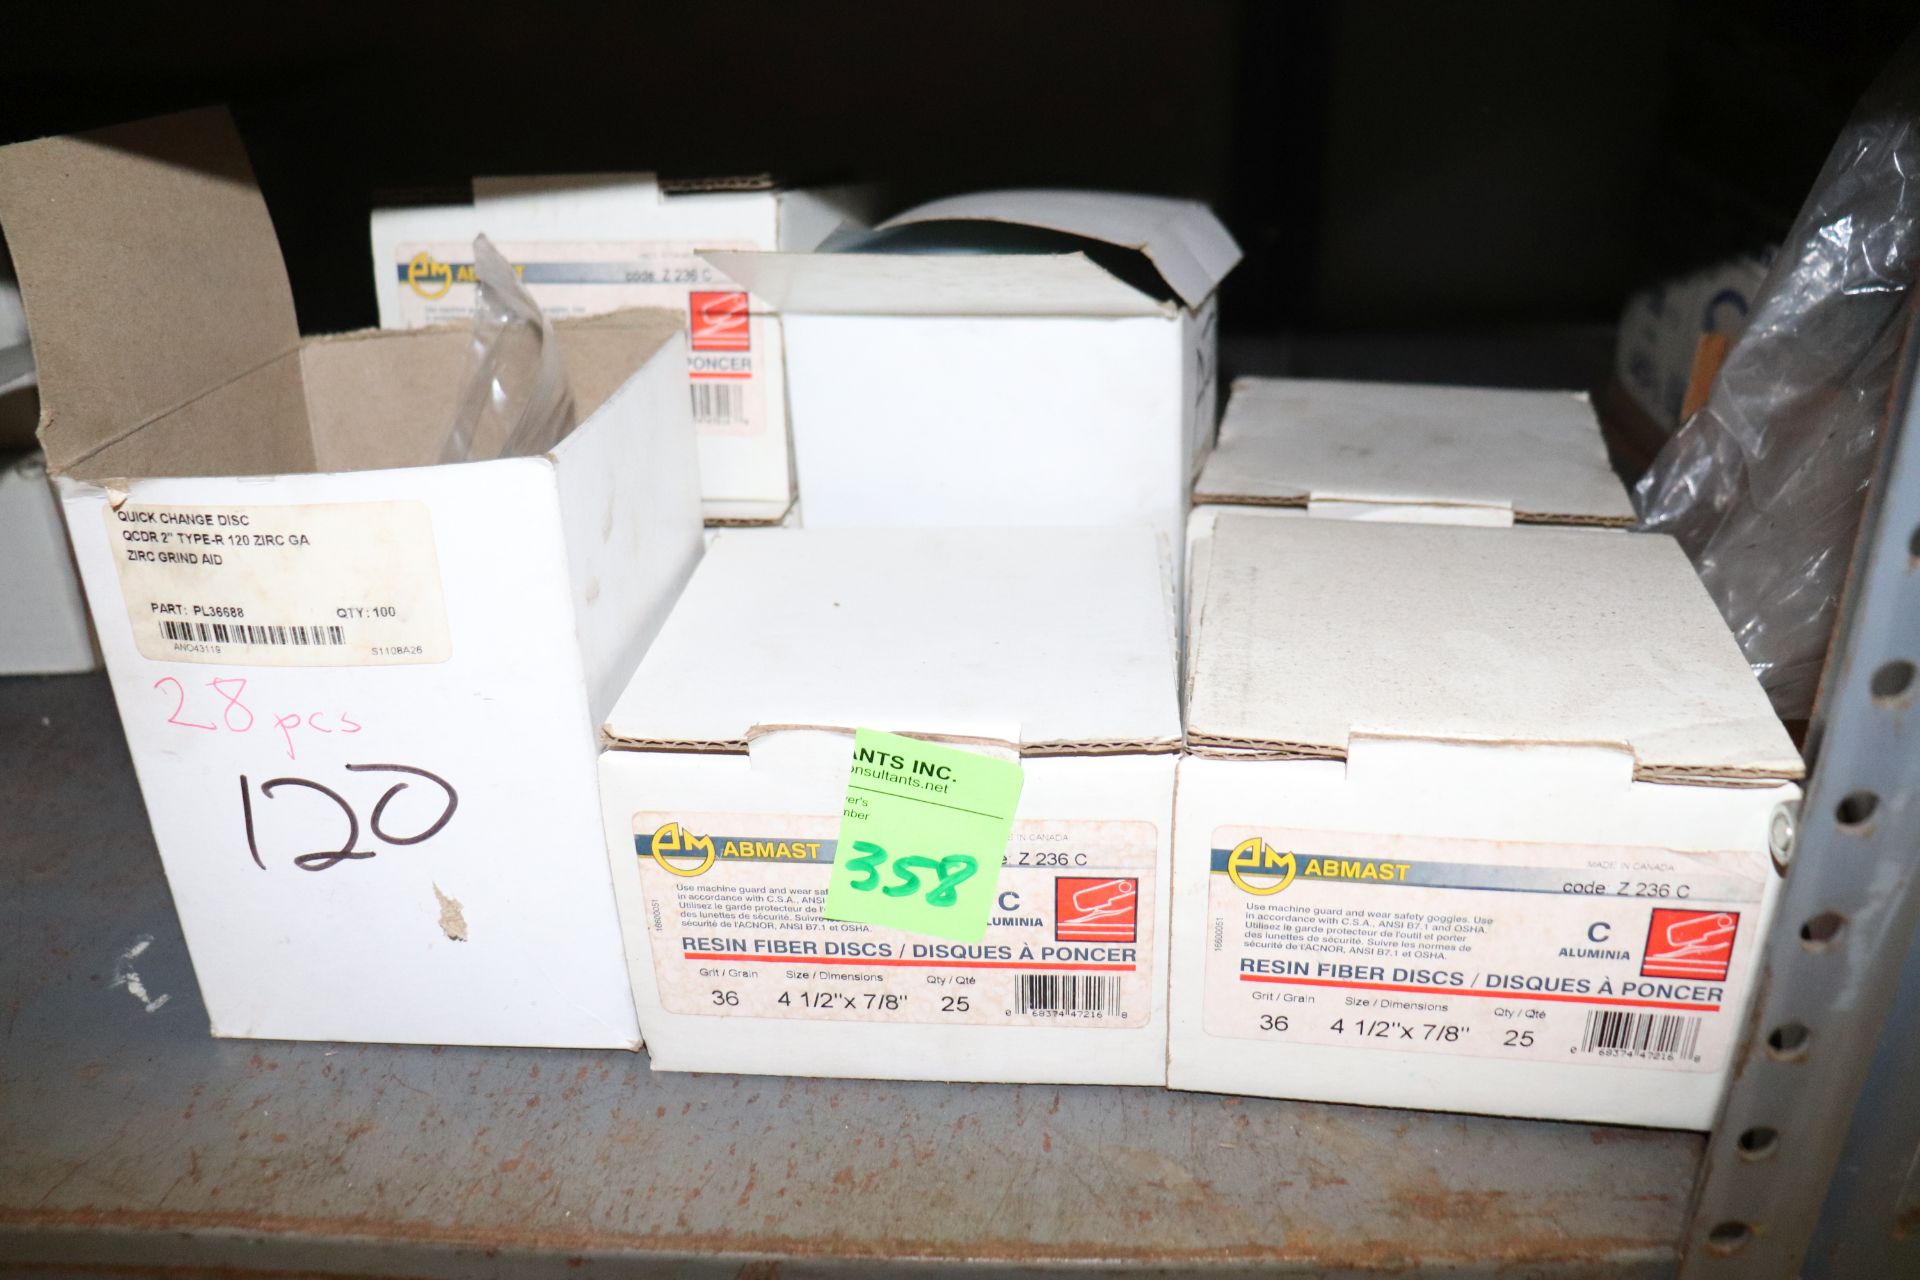 Seven boxes of Resin fiber discs, 4½", 36-grain, 2" Type R Grind Aids circles